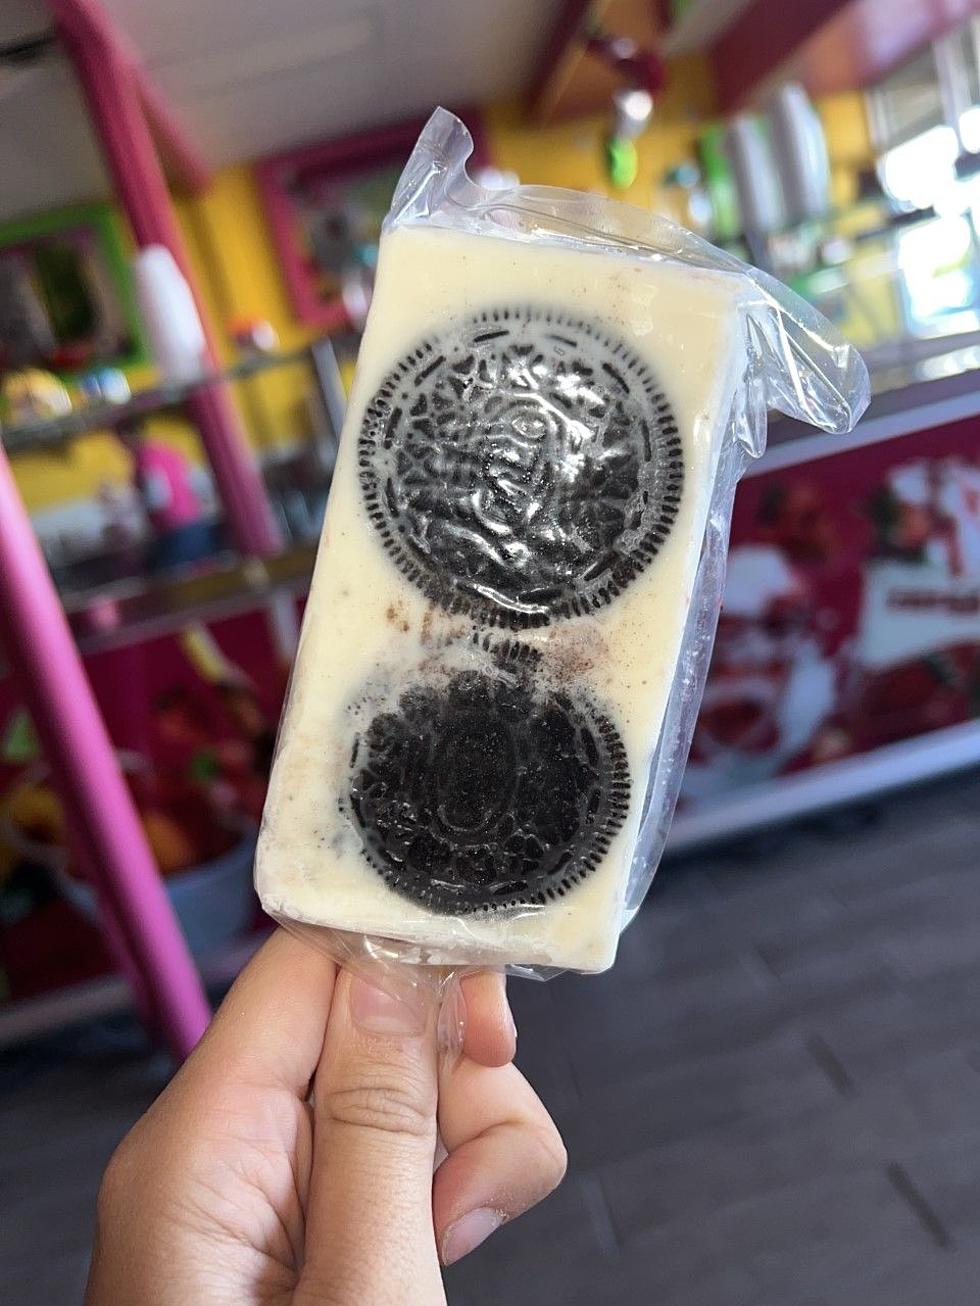 Paletas, Mangonadas & More: New Mexican Ice Cream Shop in Lubbock Has Treats to Die For